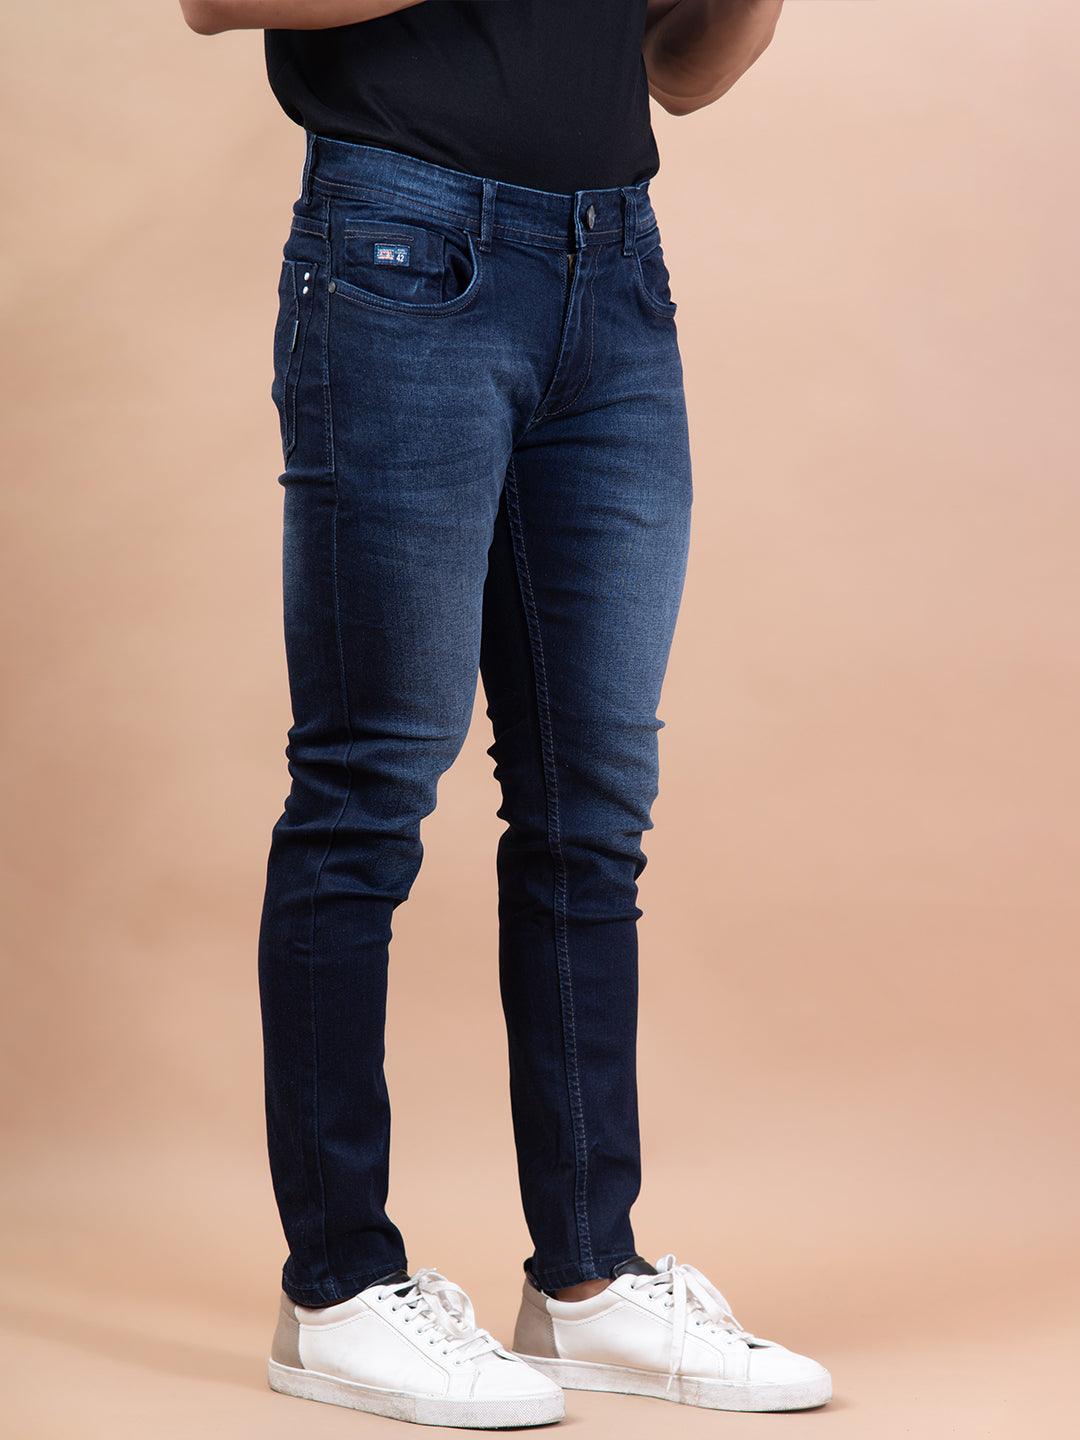 Buy Denim Blue Denim Men's Jeans Online